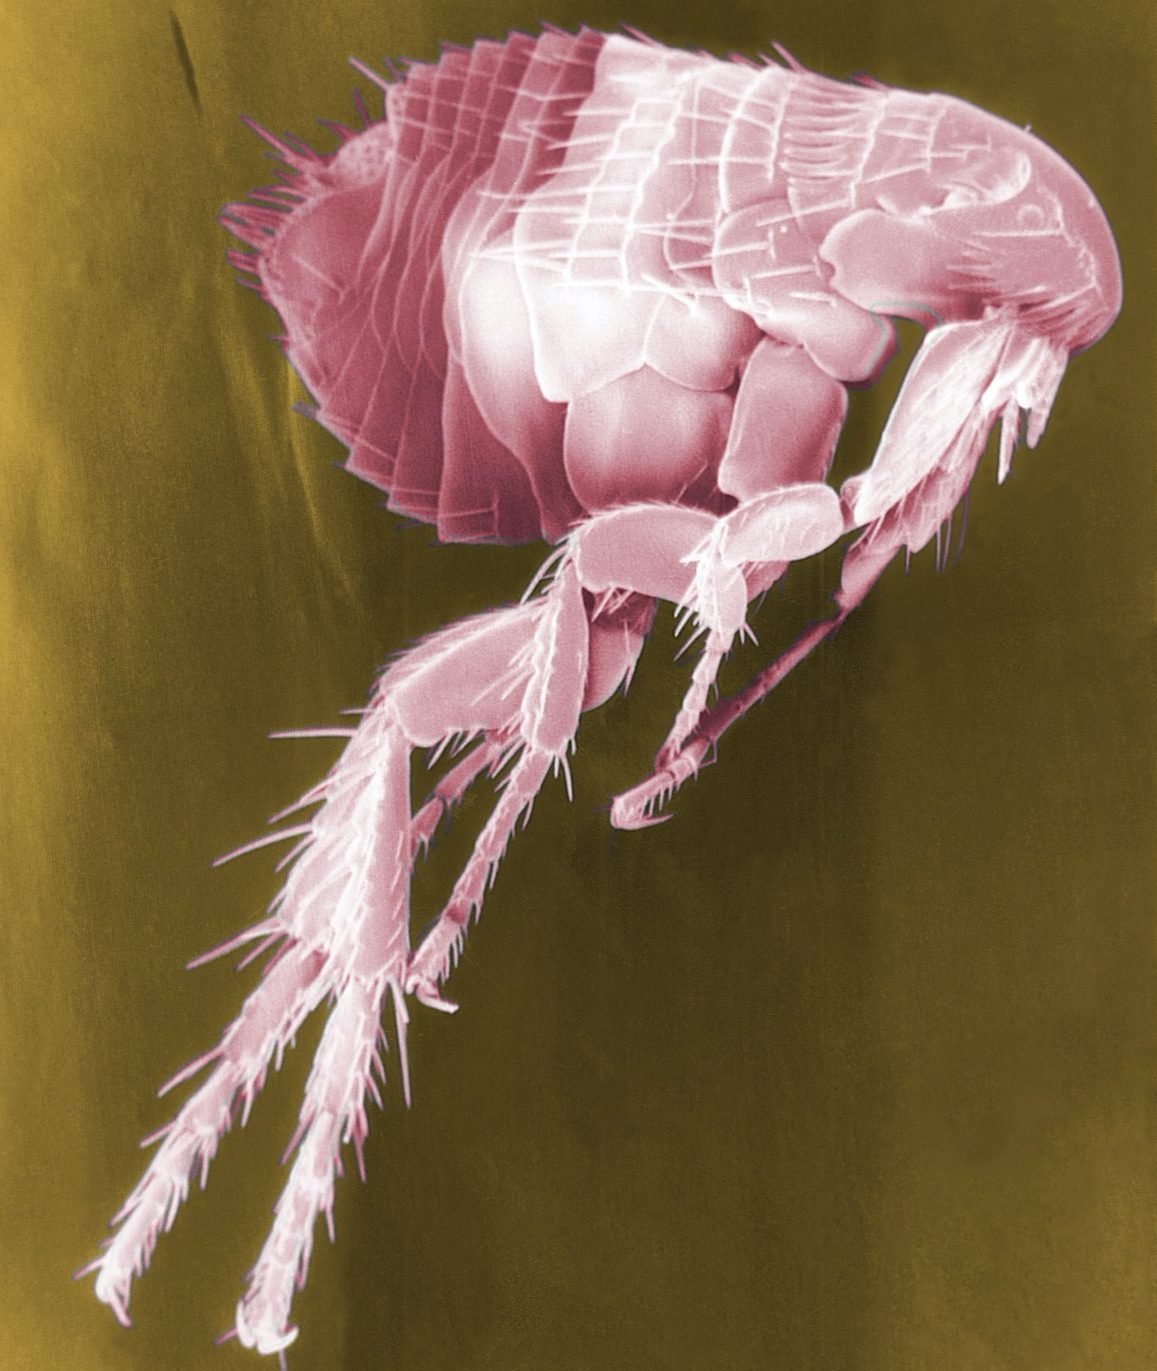 a 3d scanning electron microscope purple colored image of a flea